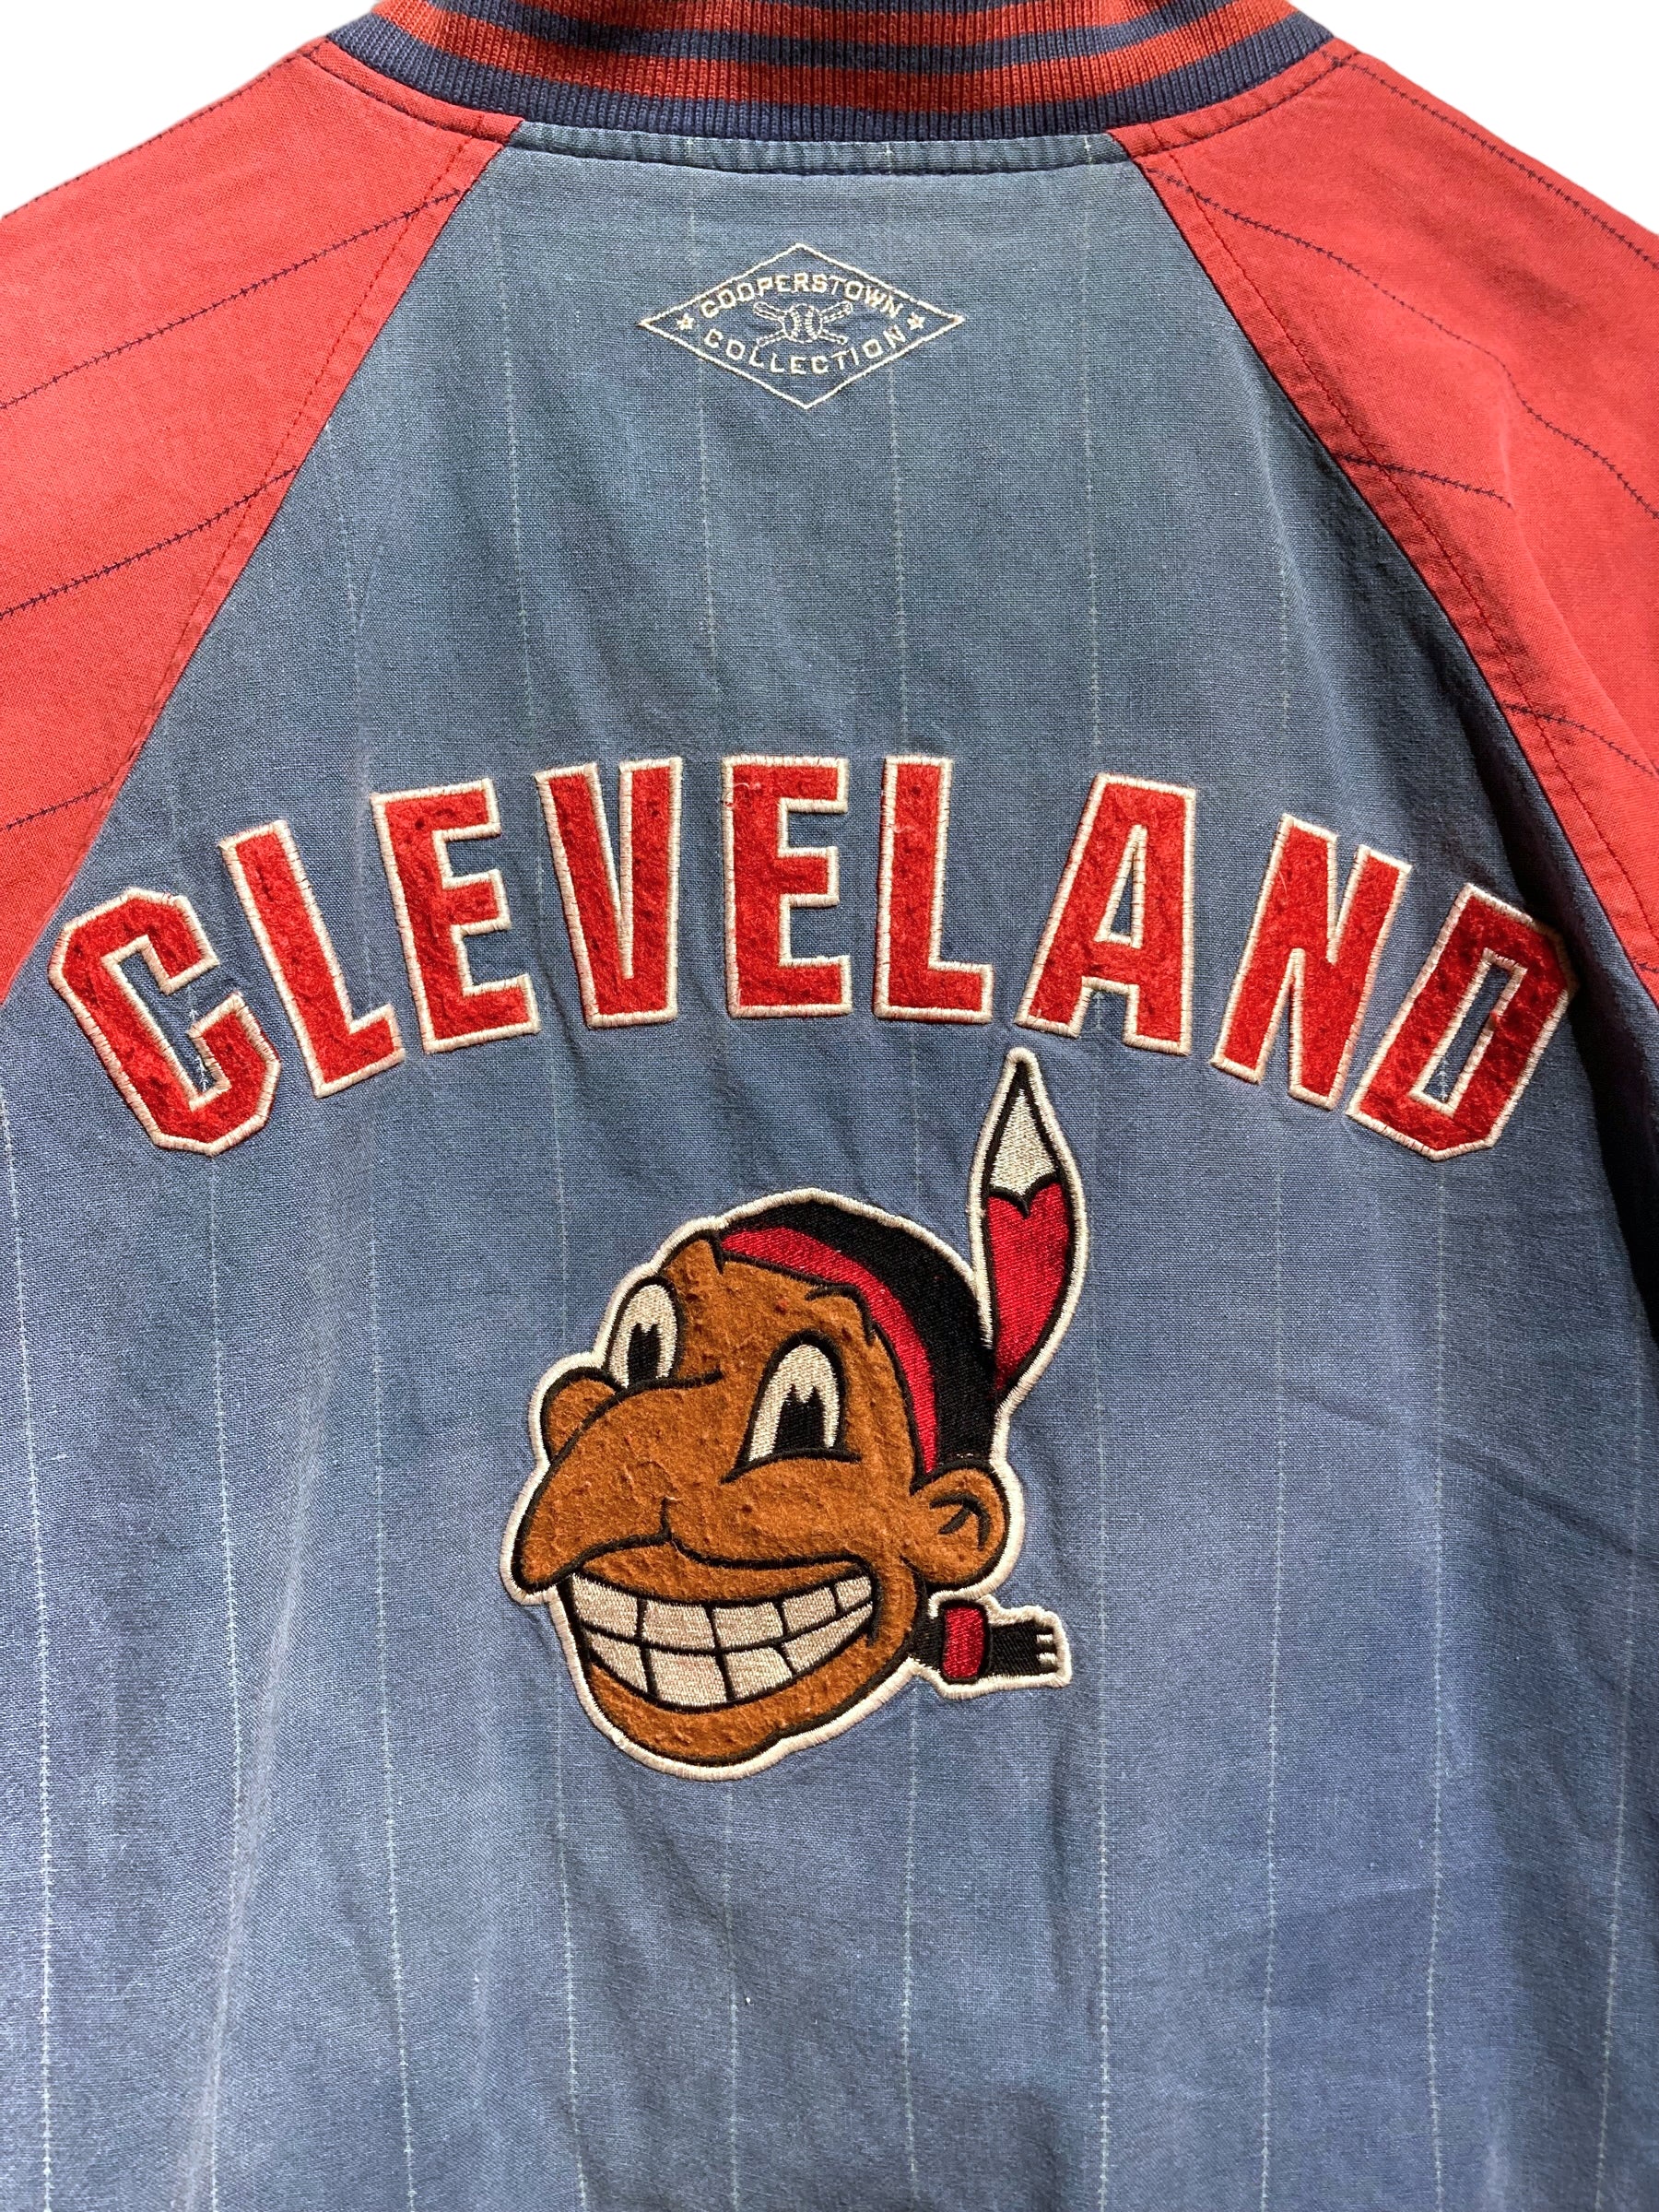 MIRAGE 90s stadium jacket 繧ｹ繧ｿ繧ｸ繧｢繝�繧ｸ繝｣繧ｱ繝�繝� MLB Indians 繧ｯ繝ｪ繝ｼ繝悶Λ繝ｳ繝� 繧､繝ｳ繝�繧｣繧｢繝ｳ繧ｺ 窶� STORAGE  UNLIMITED